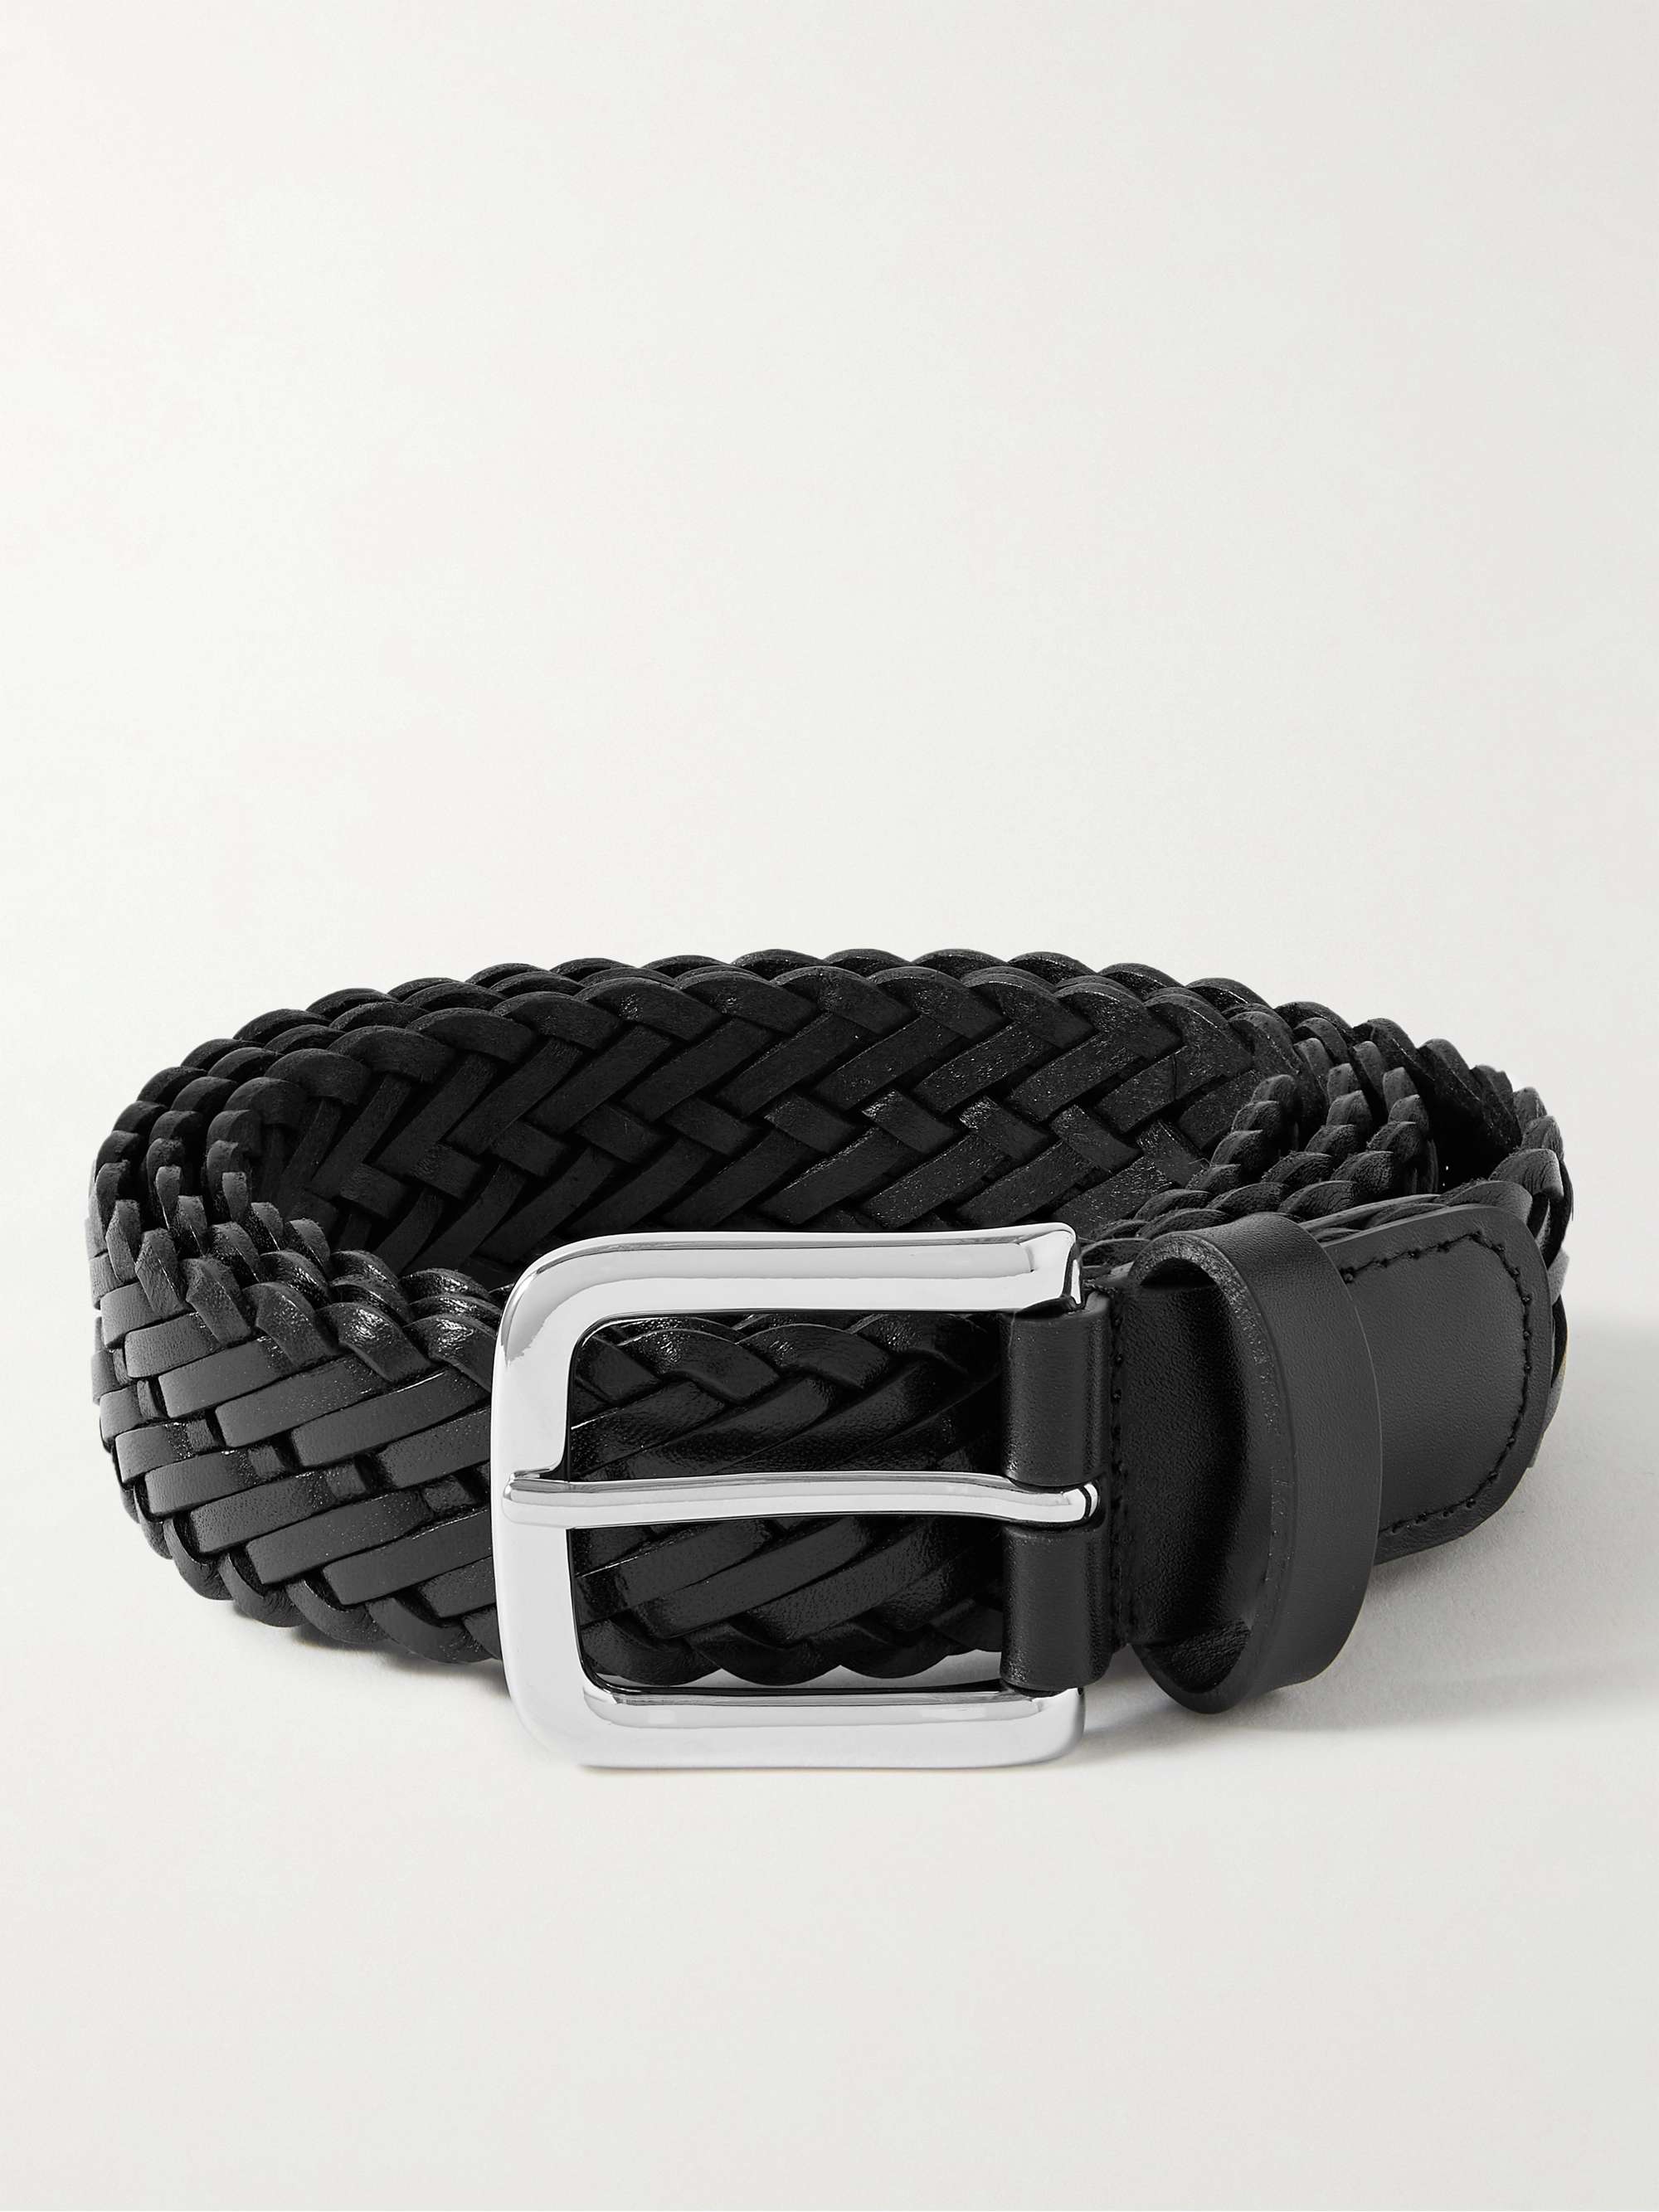 3cm Woven Leather Belt